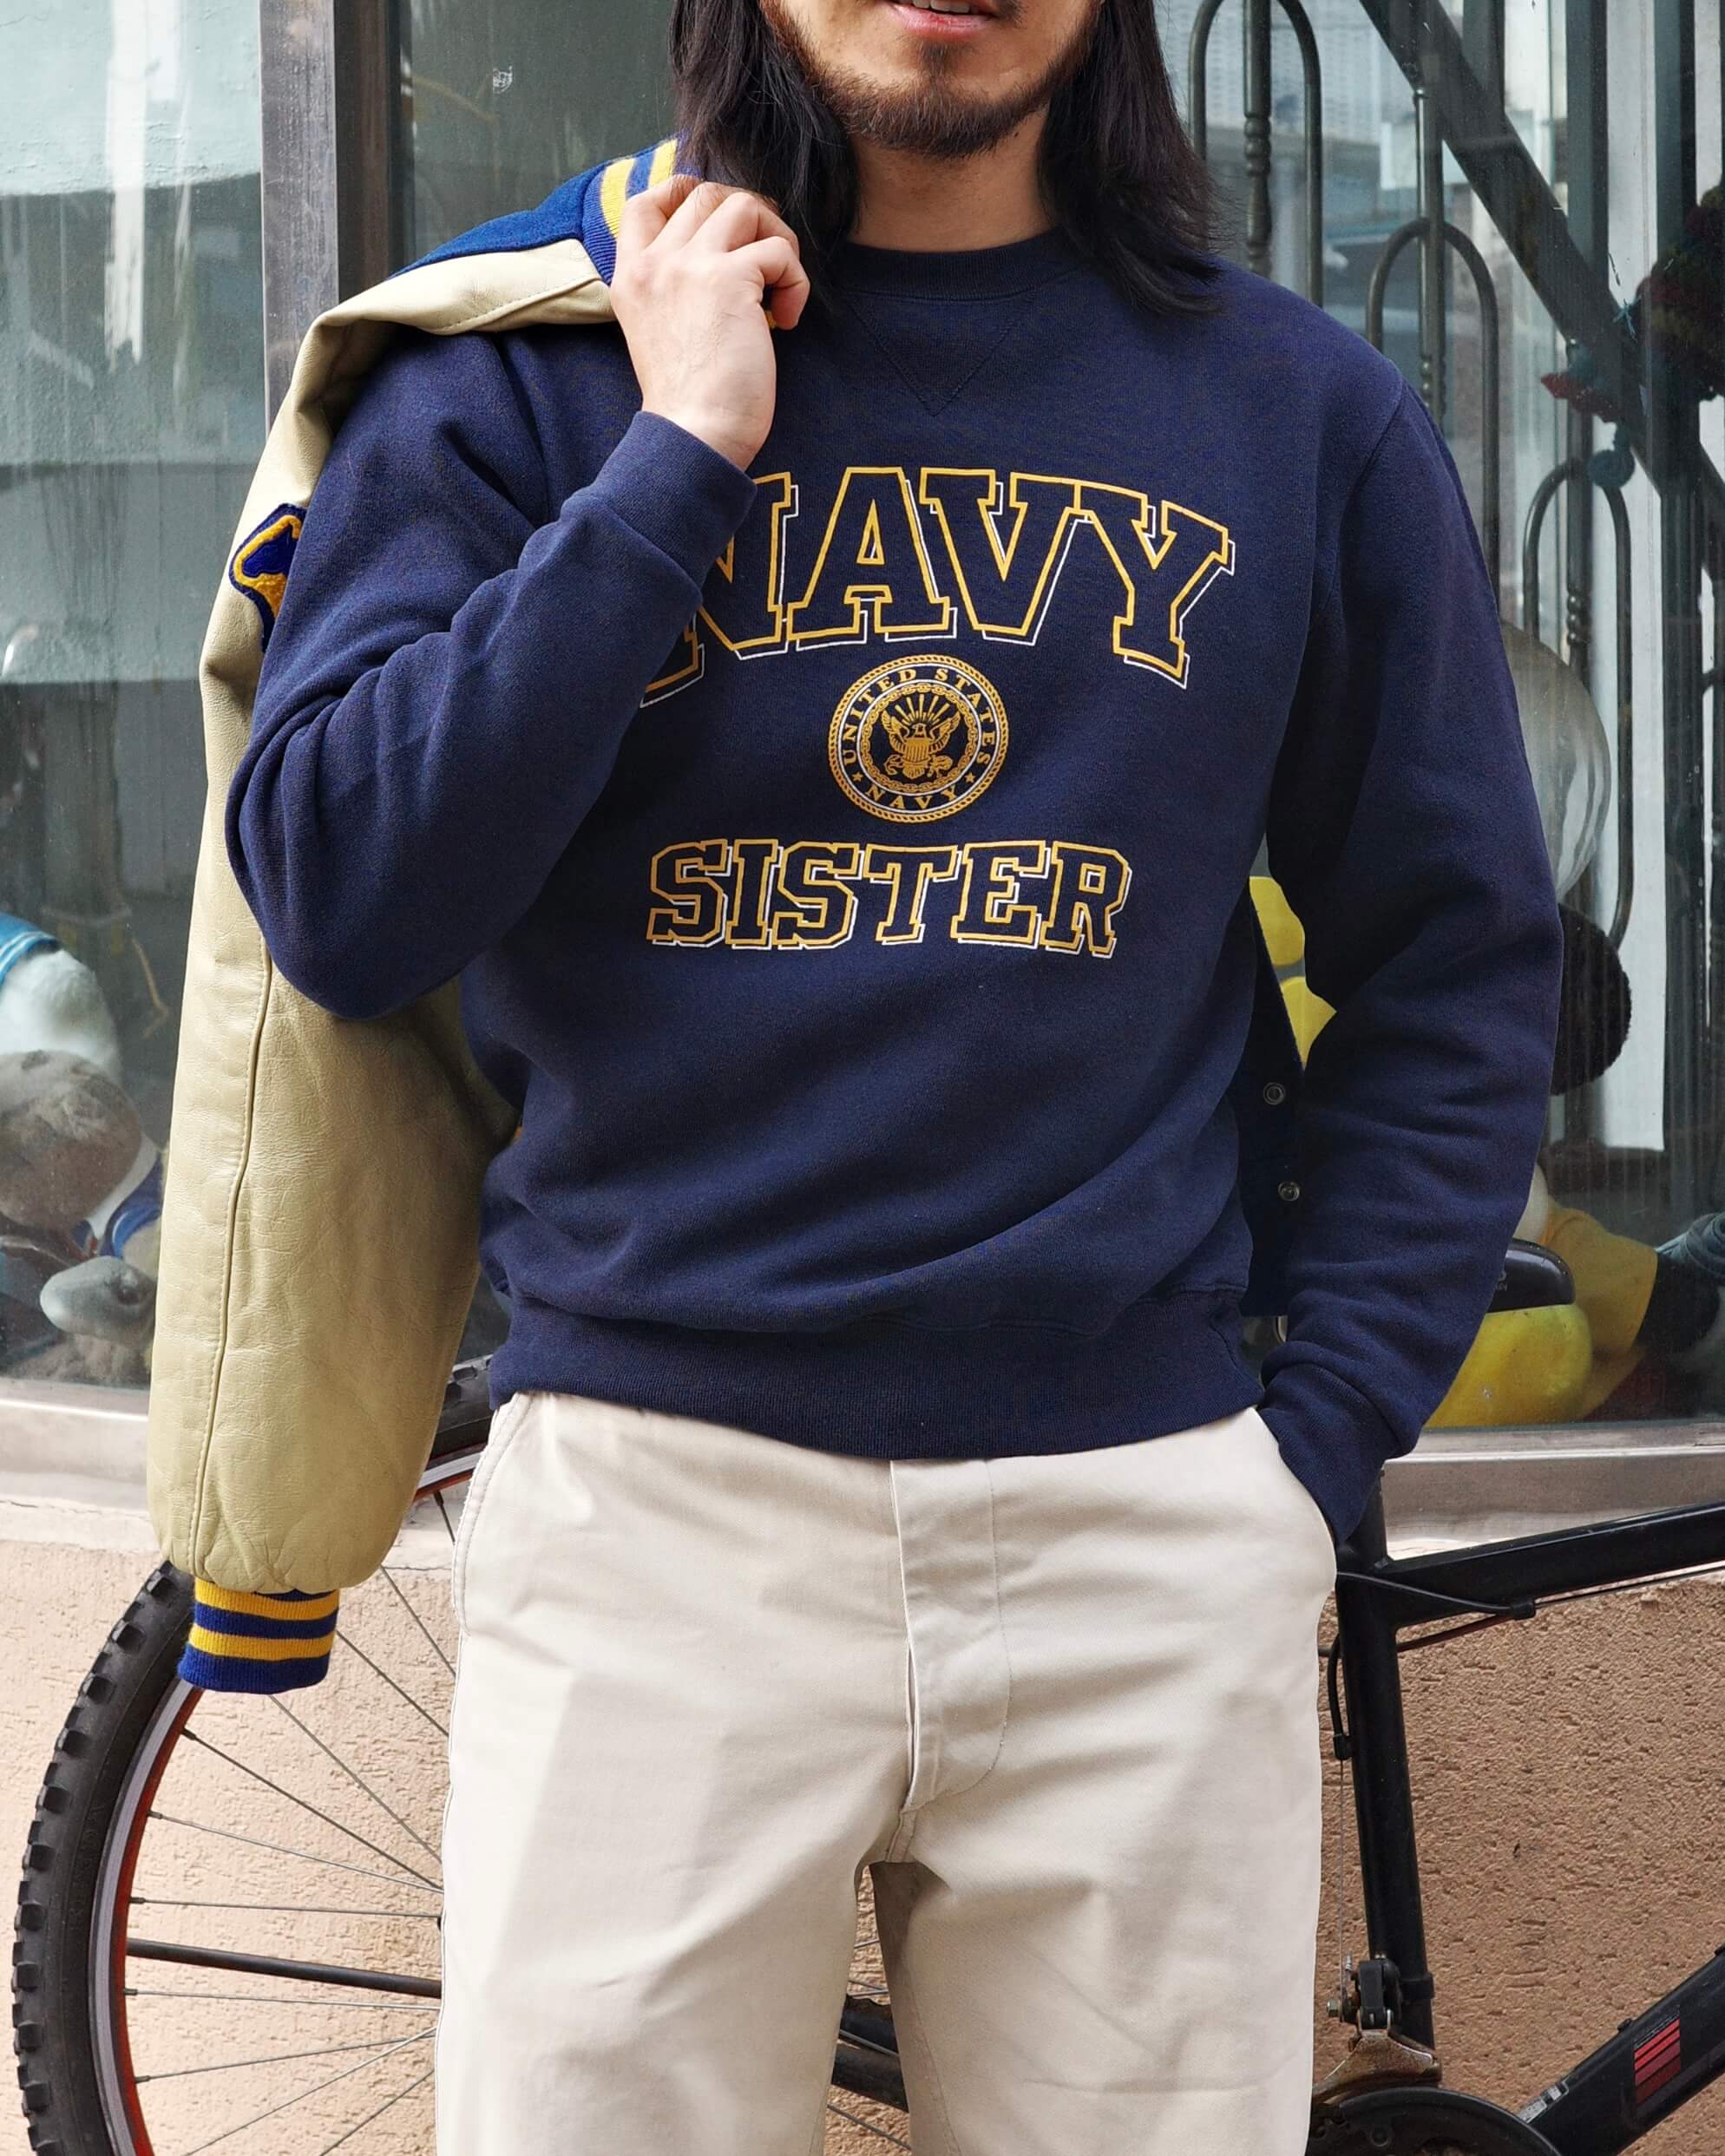 2000&#039;s Sofee Navy Sister Sweatshirts